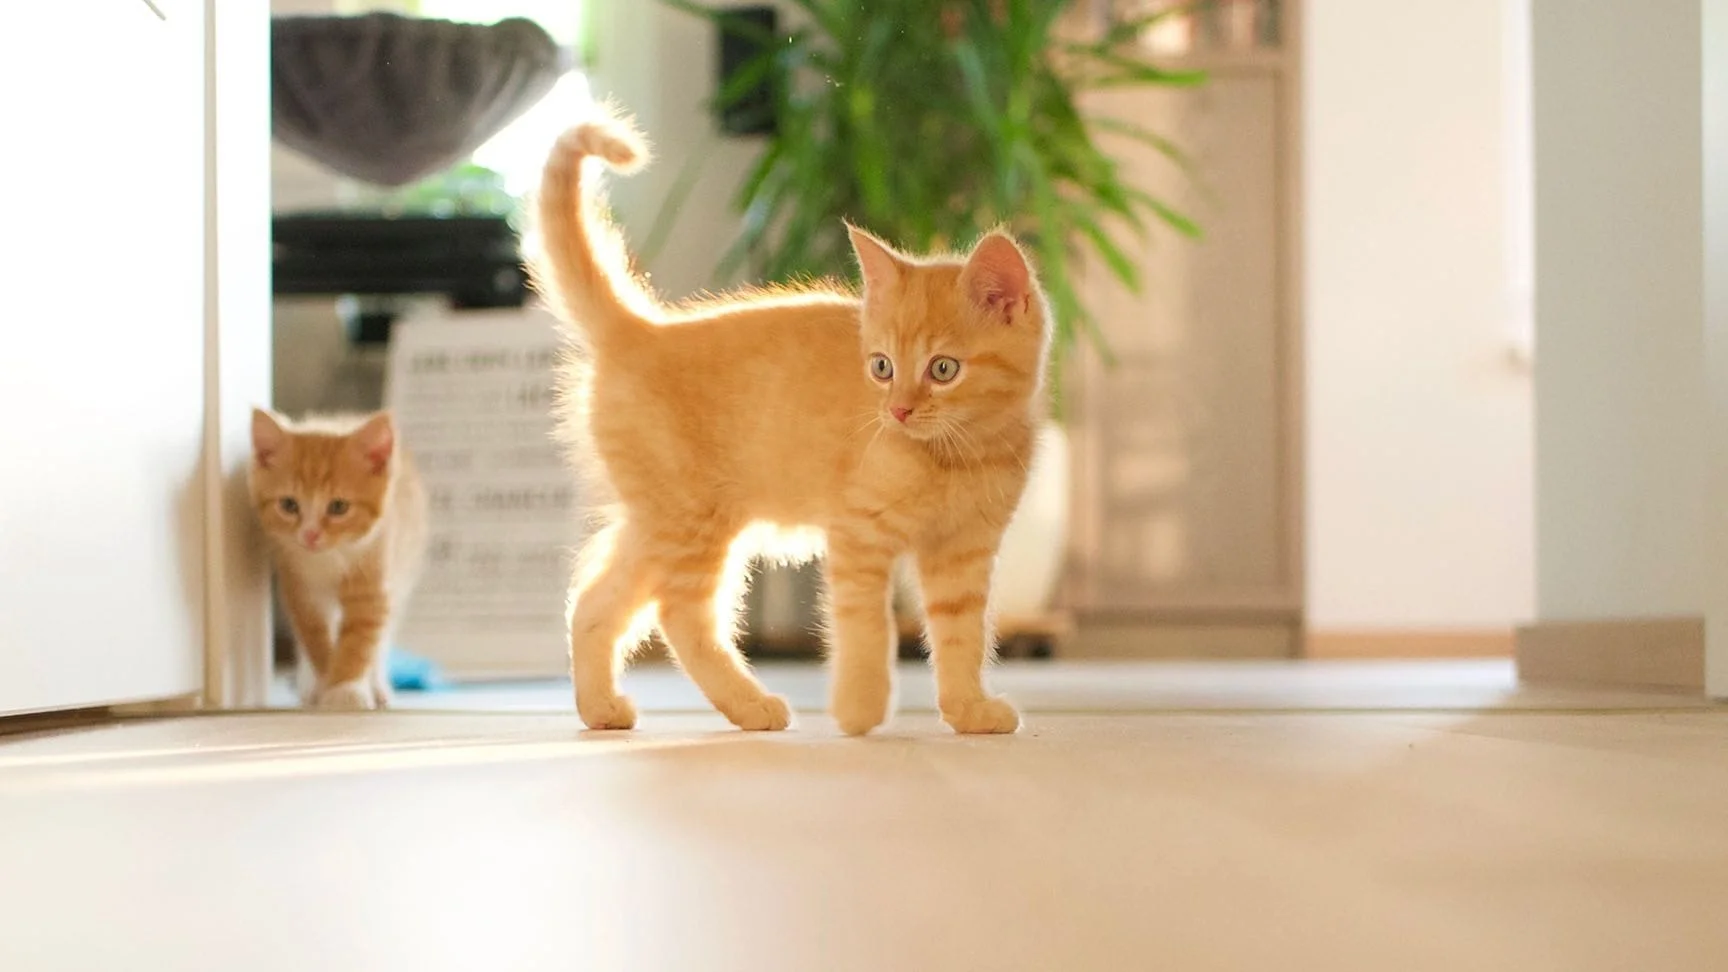 Two orange tabby kittens